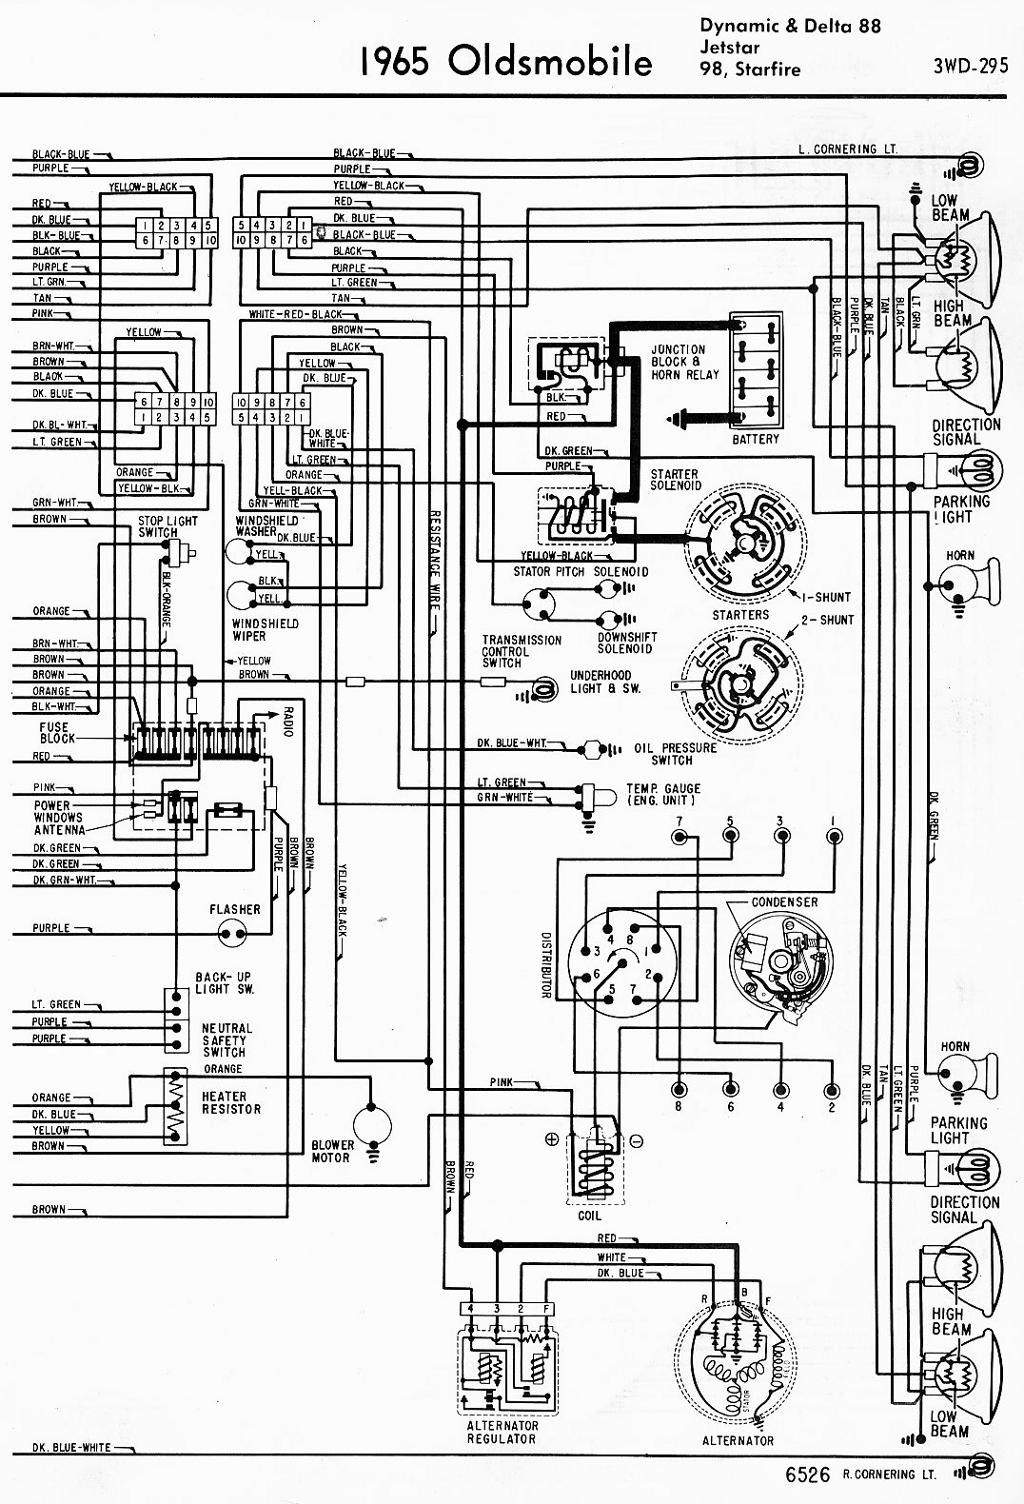 Wiring Diagram For A 1966 Dynamic 88